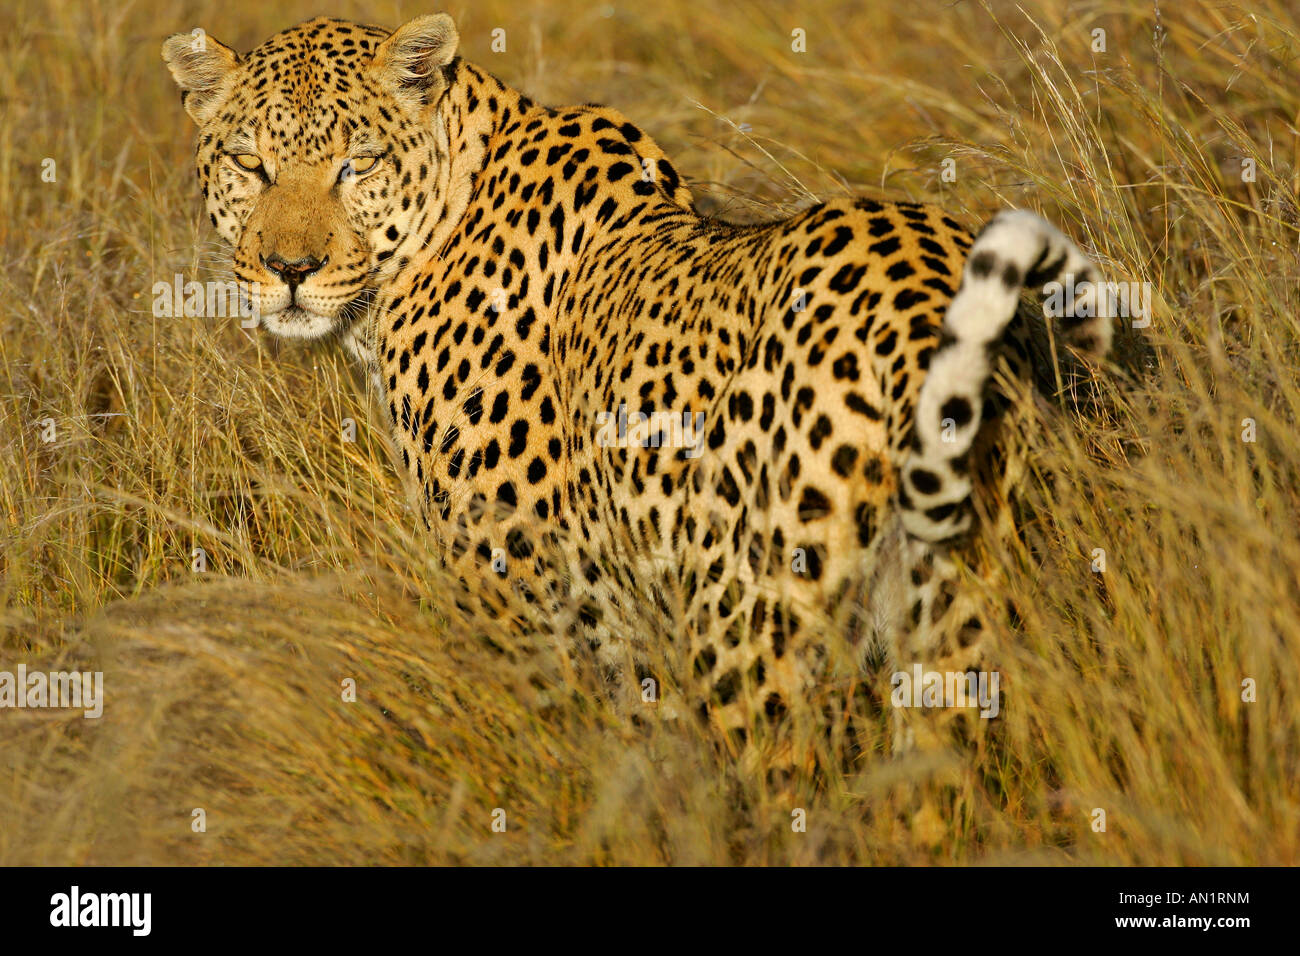 Maschio di leopard panthera pardus in piedi di Savannah in mattina presto luce della Namibia in Africa Foto Stock